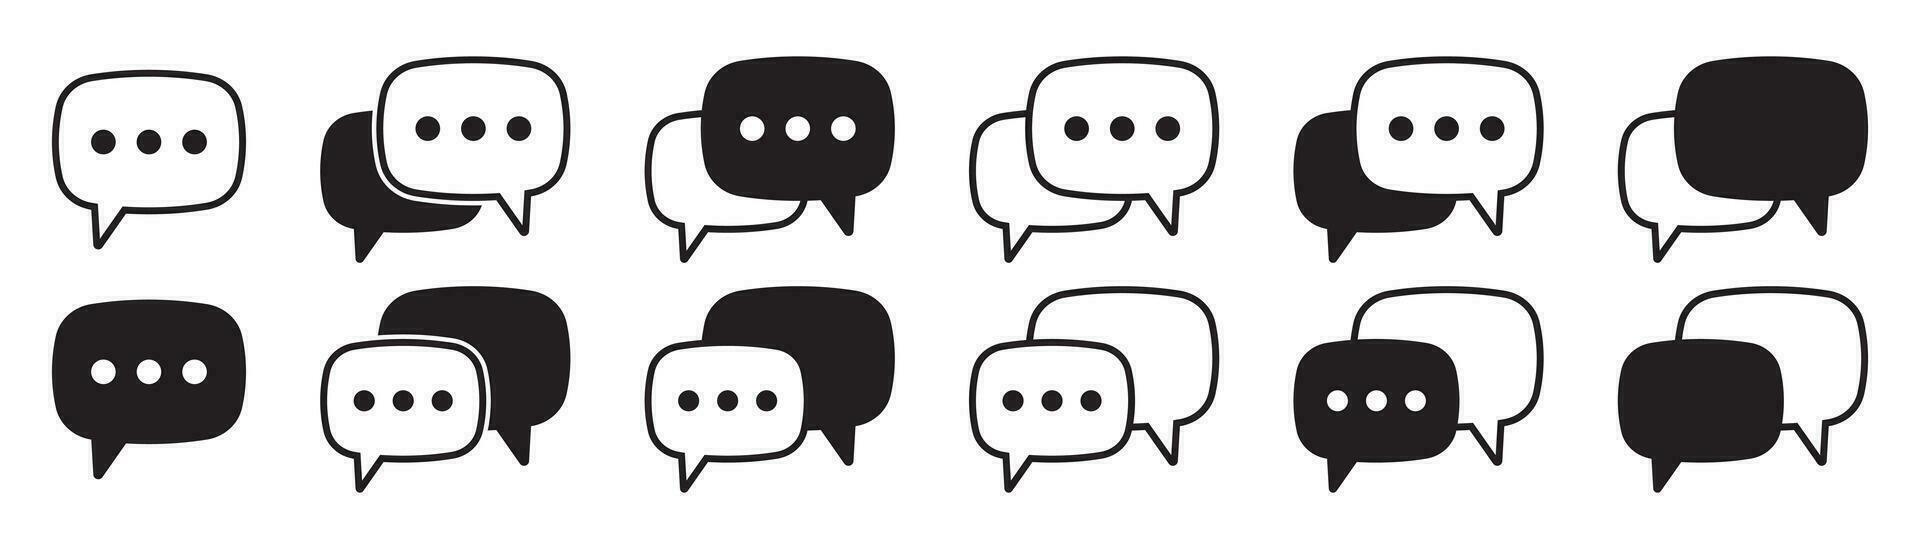 Chat icon. Talk bubble speech sign. Comment icon. Message, speech bubble vector icon.